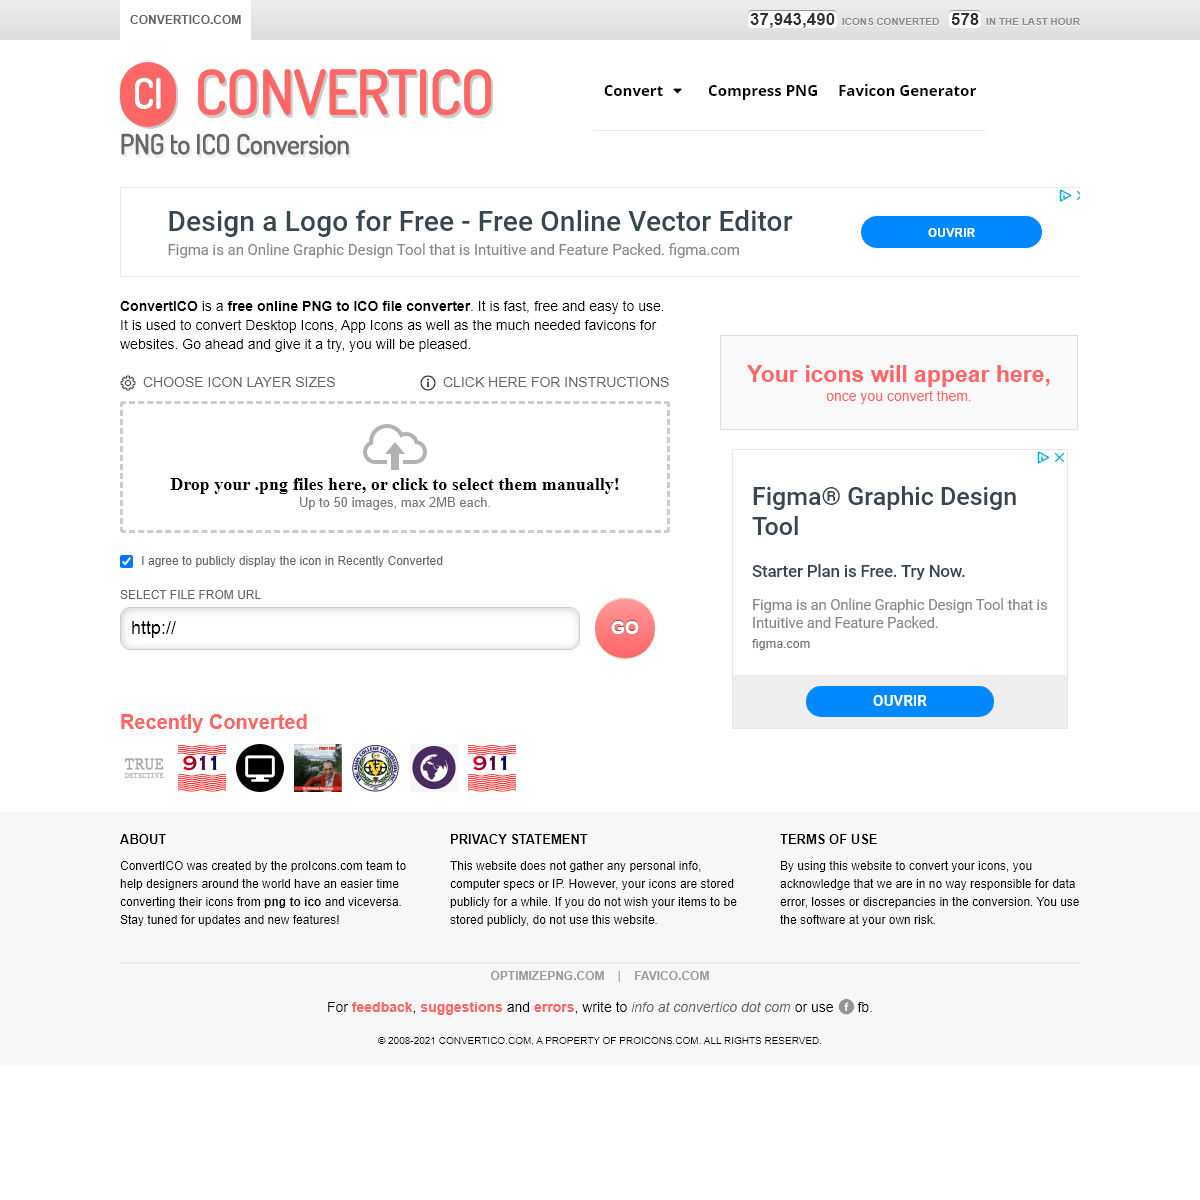 A complete backup of convertico.com